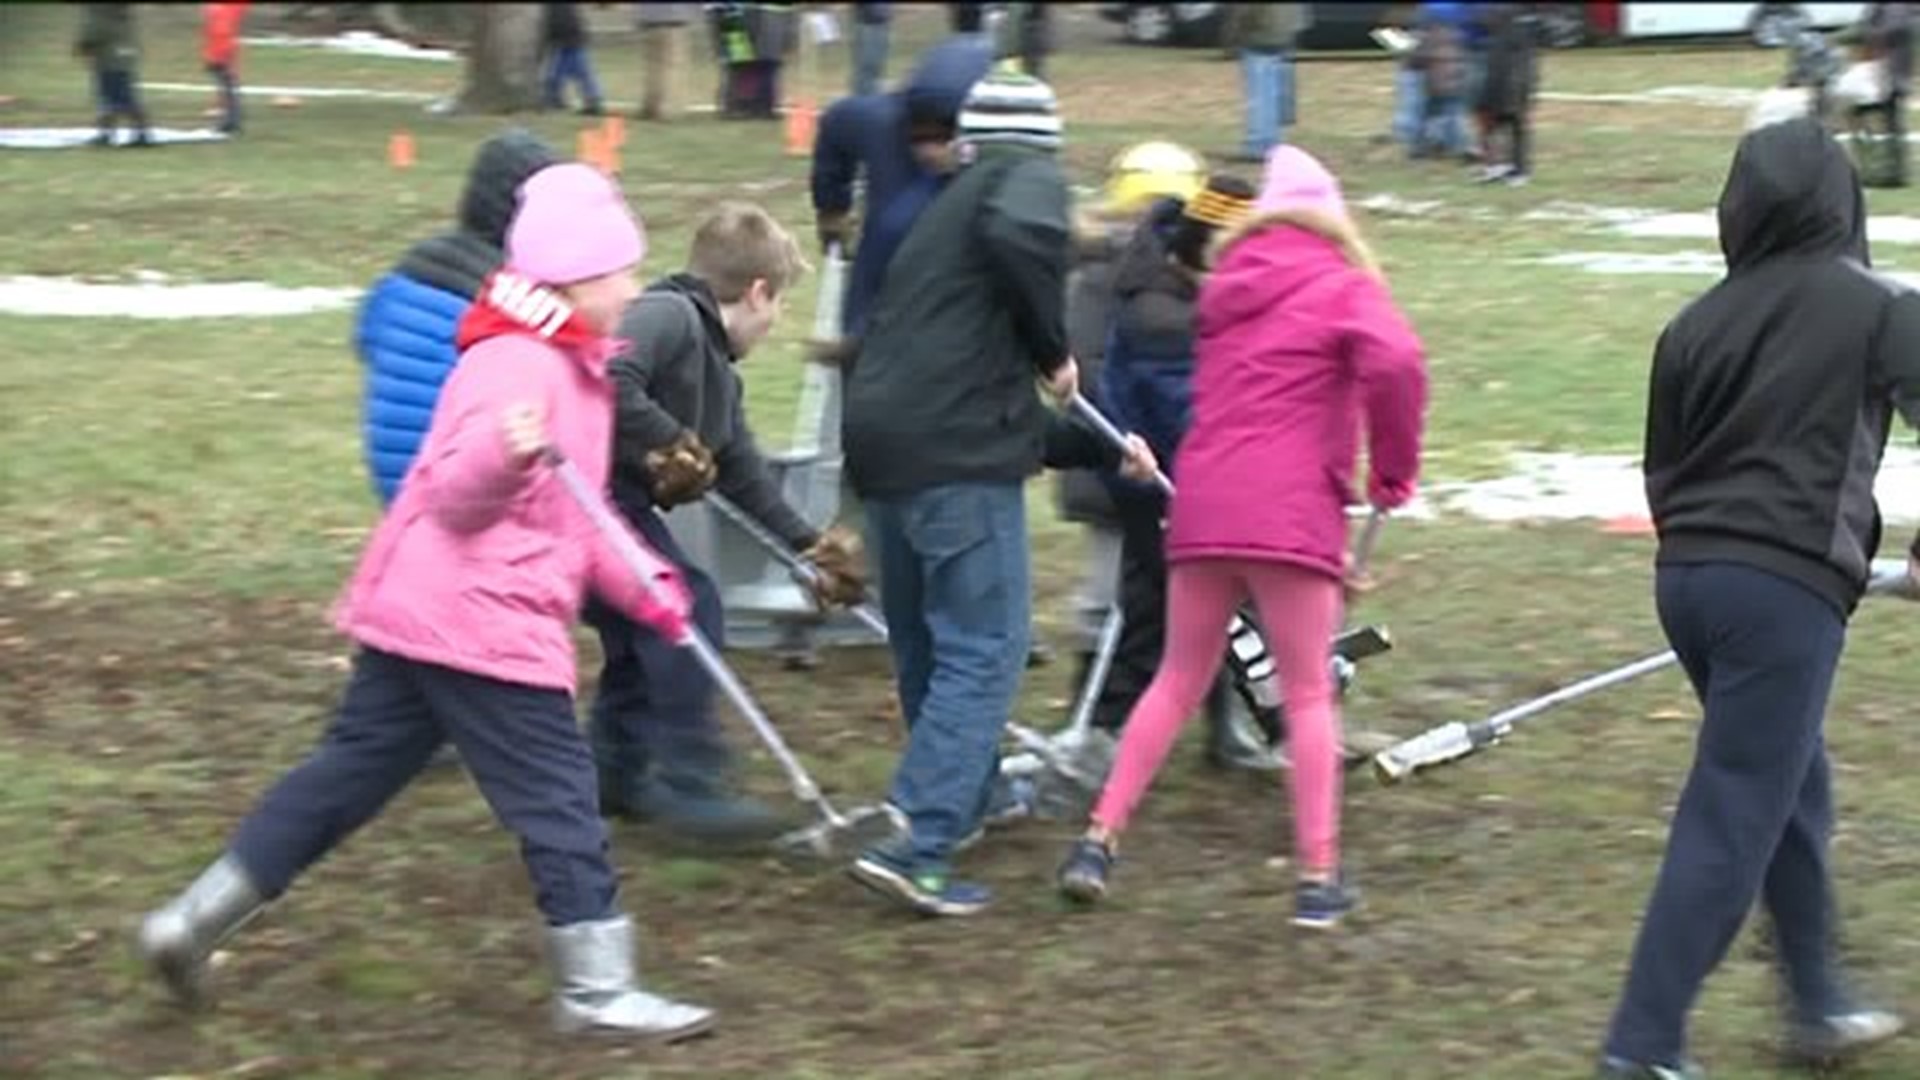 Boy Scouts Celebrate Annual Winter Fun Day